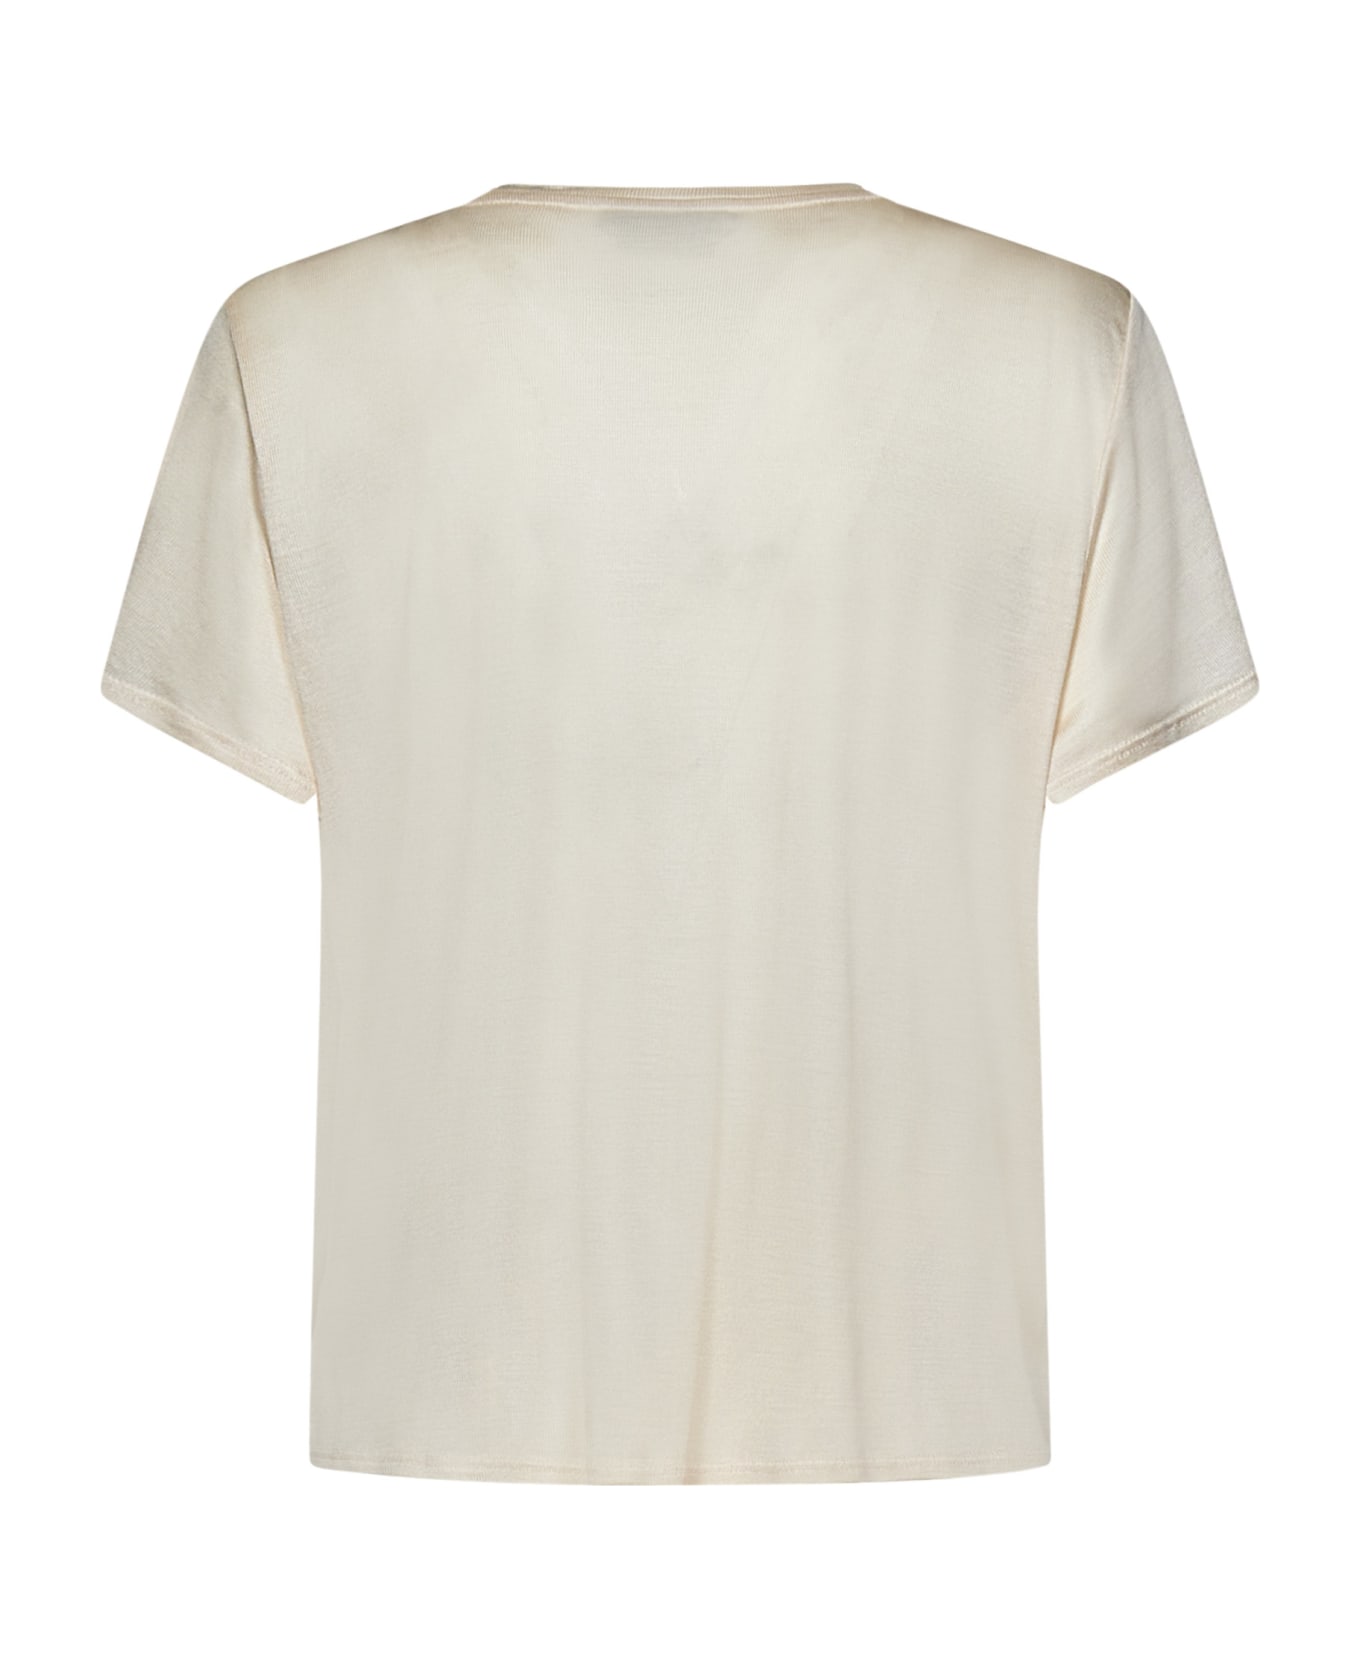 Tom Ford T-shirt - Beige